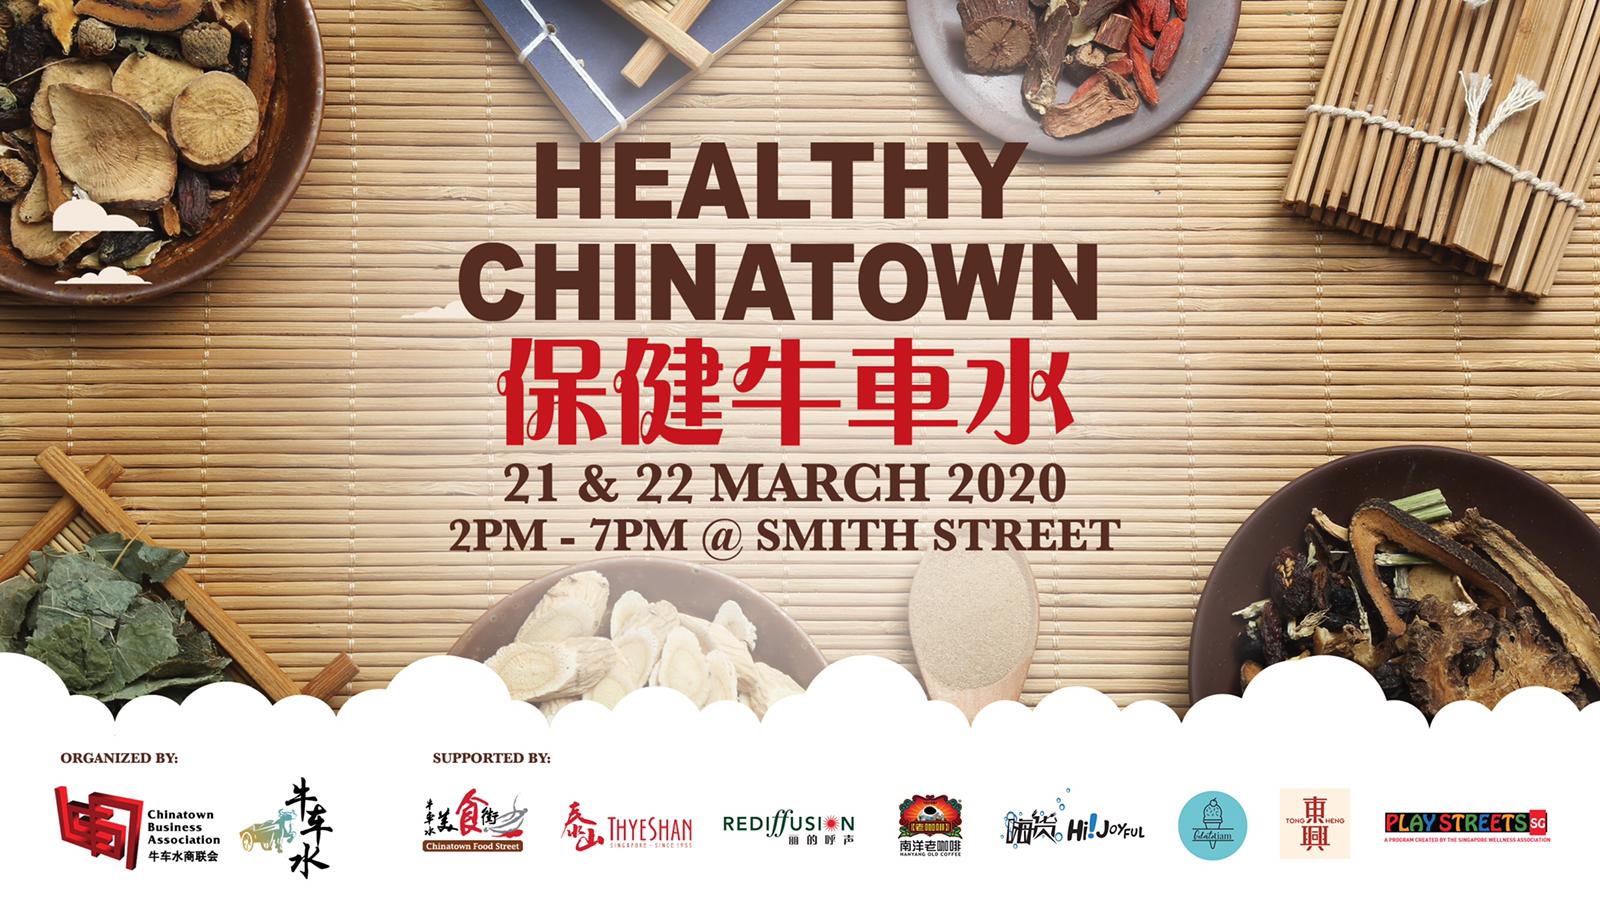 Healthy Chinatown